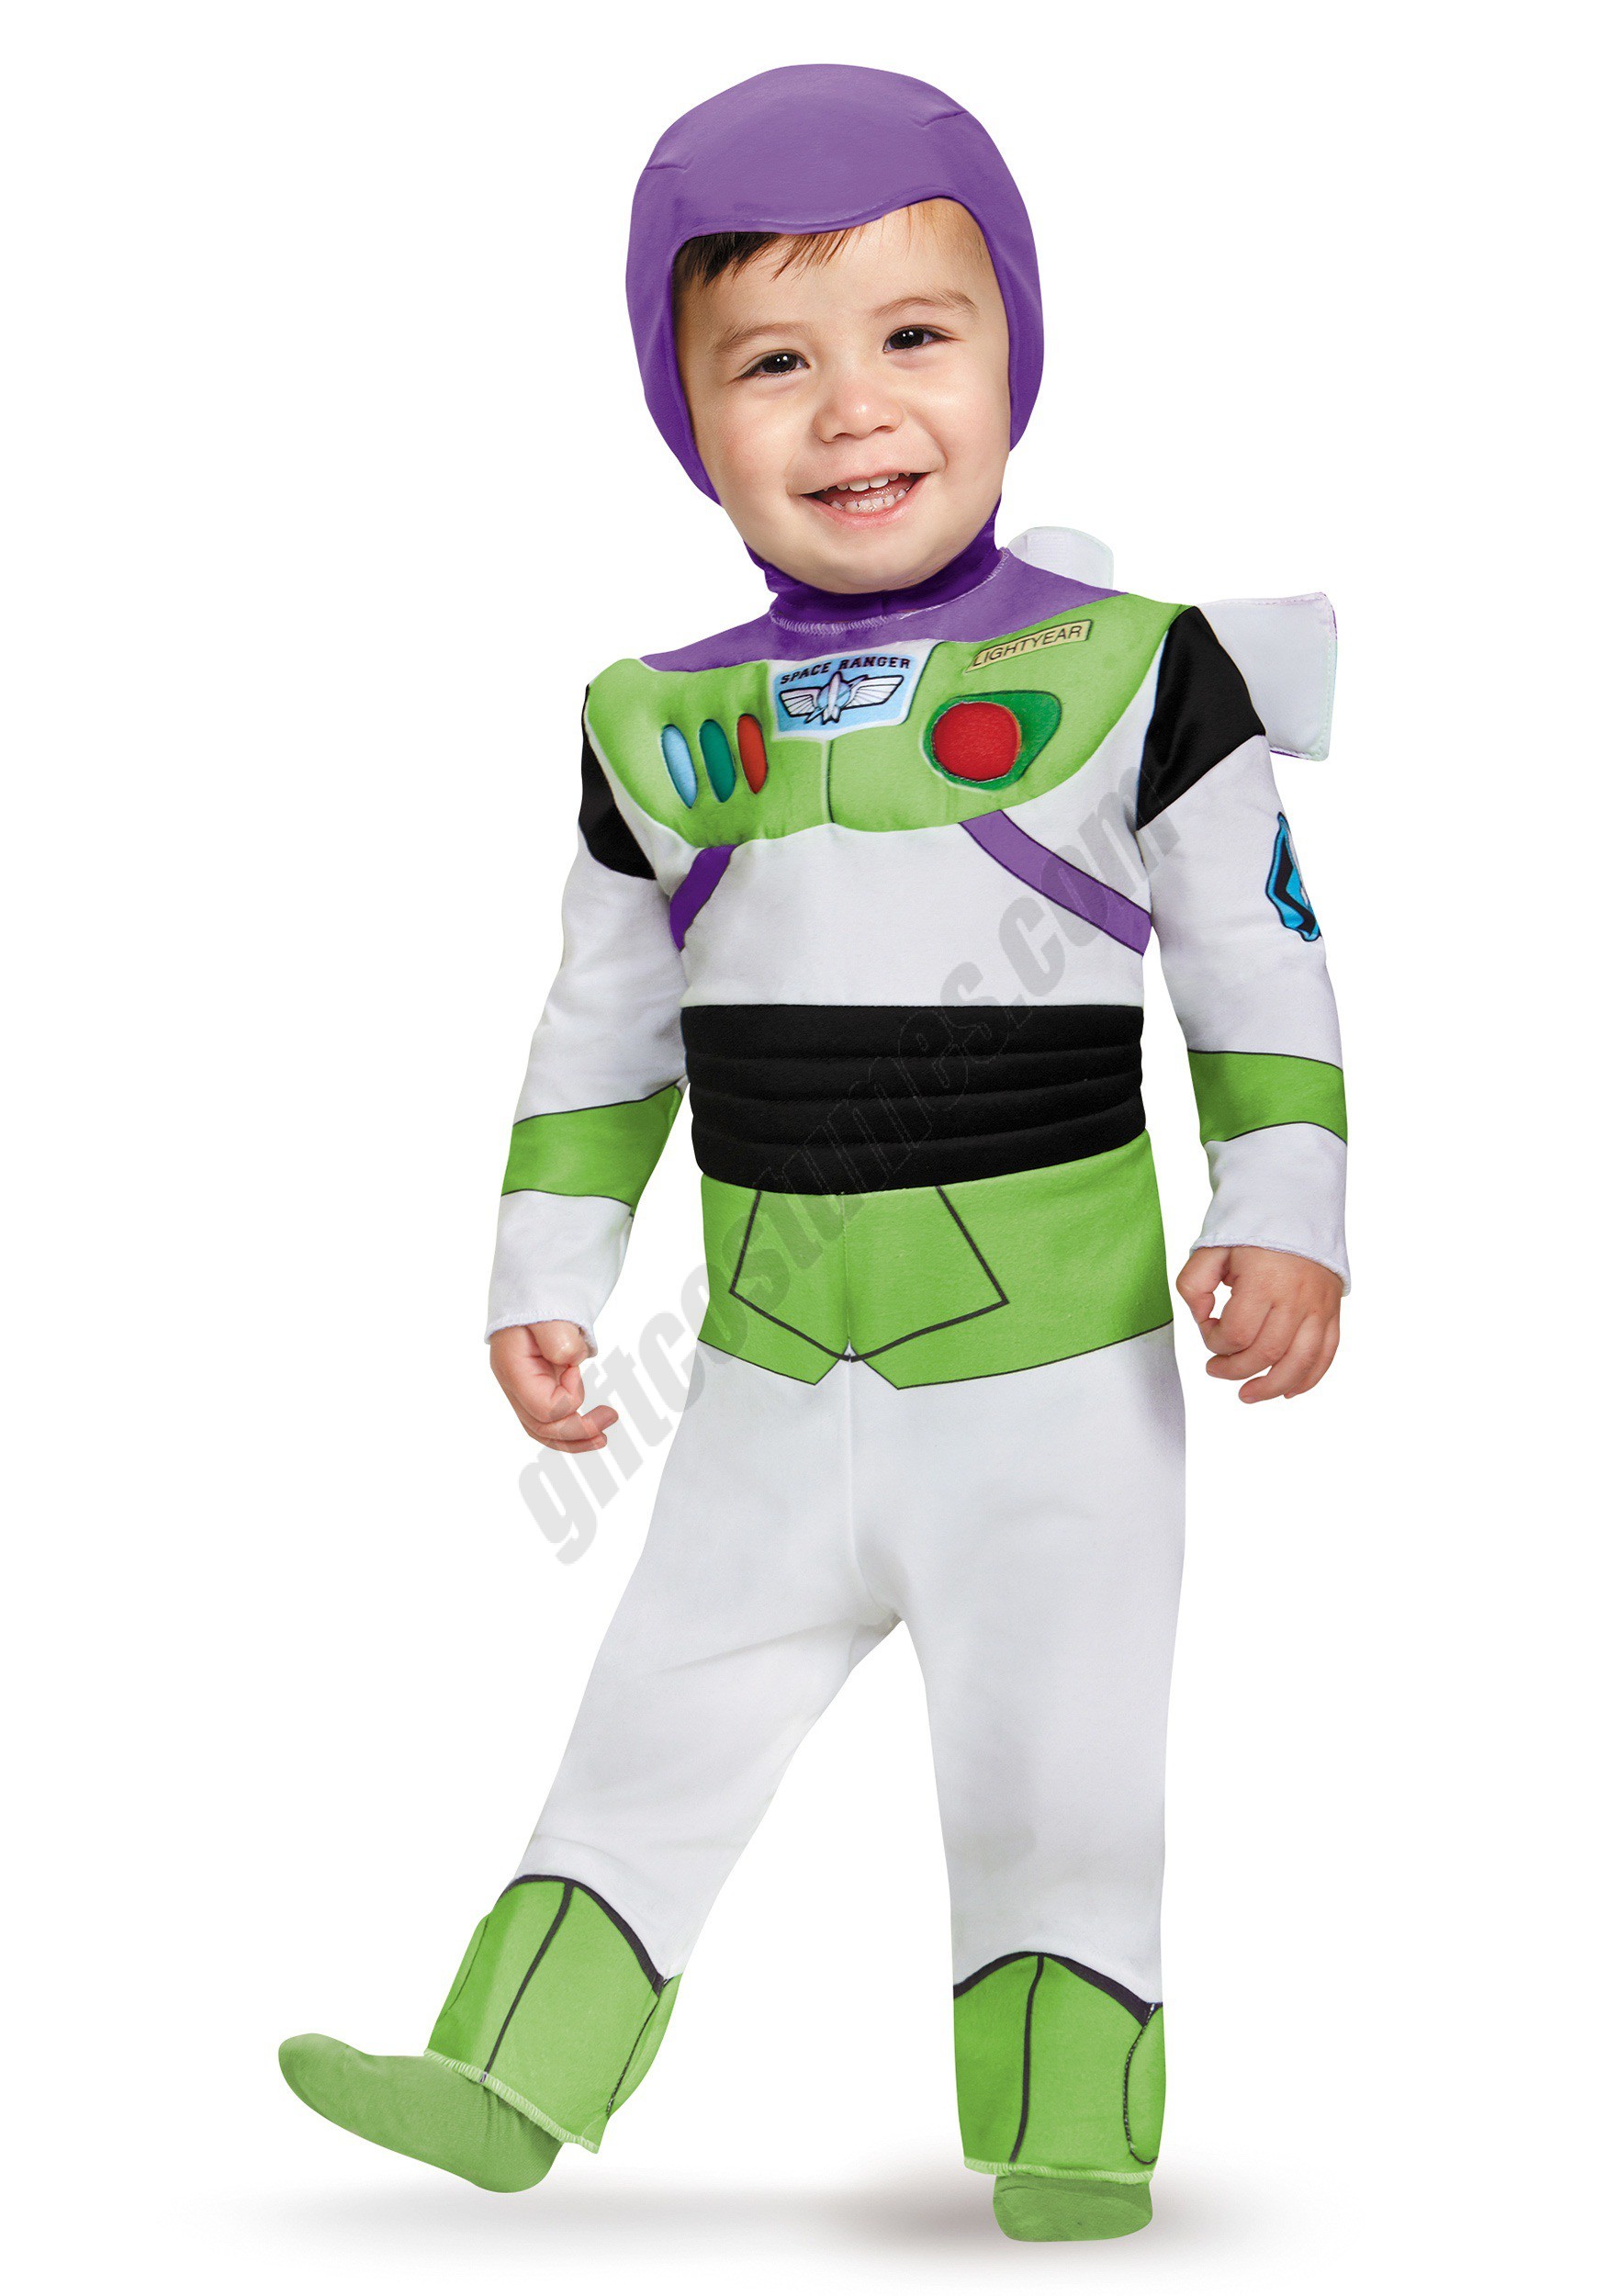 Deluxe Buzz Lightyear Infant Costume Promotions - Deluxe Buzz Lightyear Infant Costume Promotions